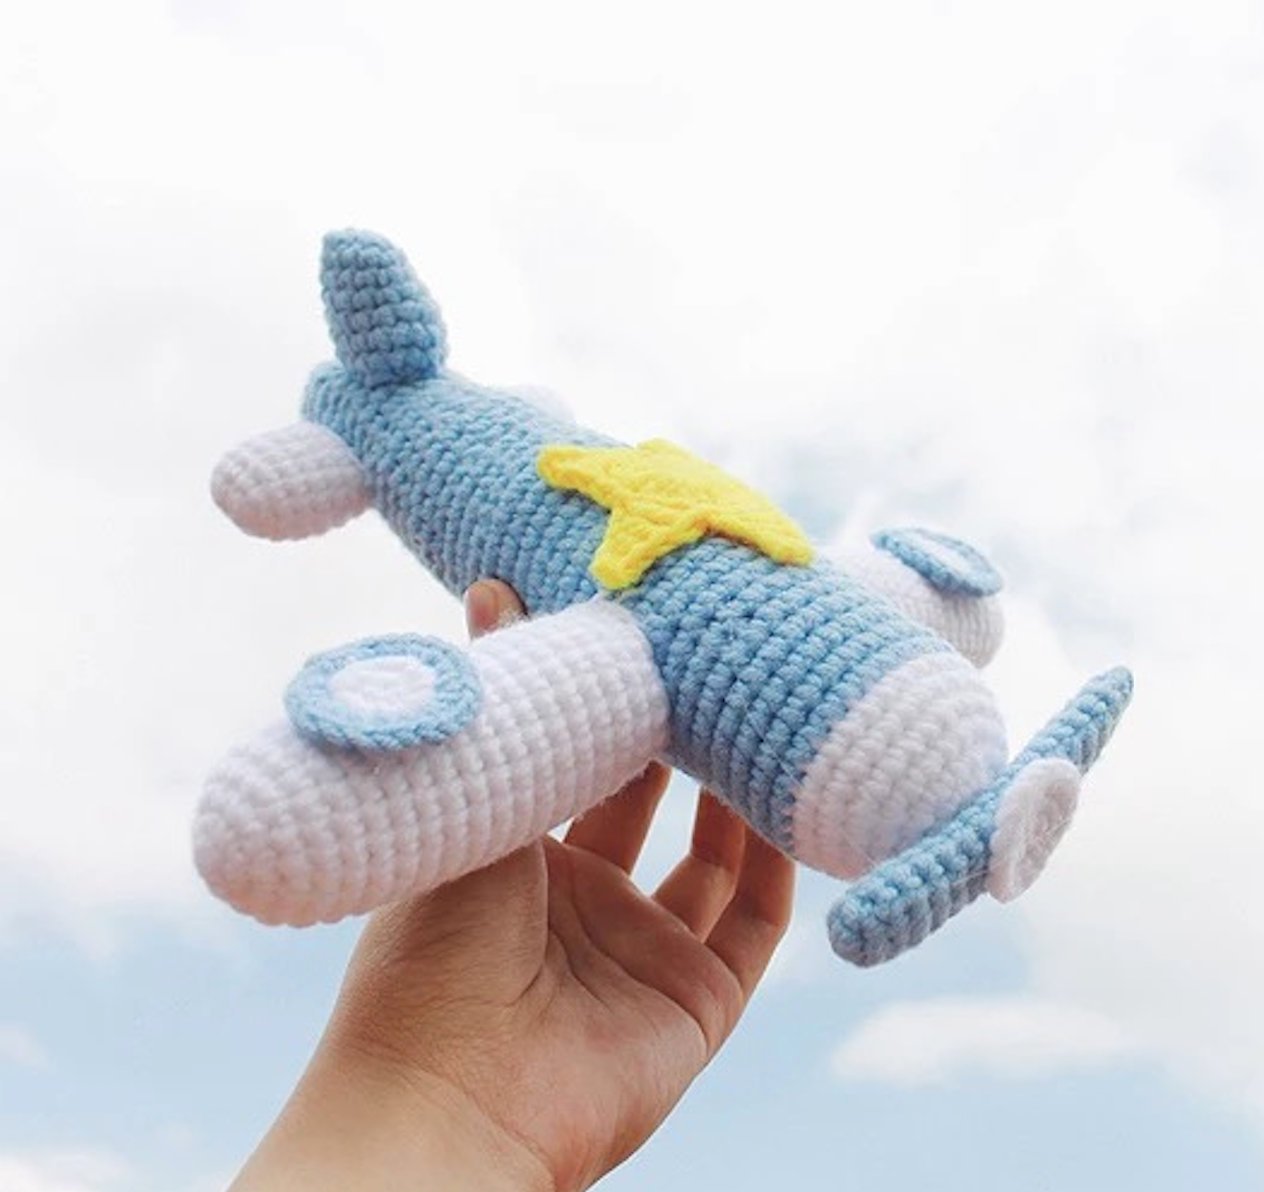 airplane-toy-amigurumi-airplane-crochet-airplane-amigurumi-aircraft-crochet-aircraft-amigurumi-knitted-airplane-boys-toy-kids-gift-3